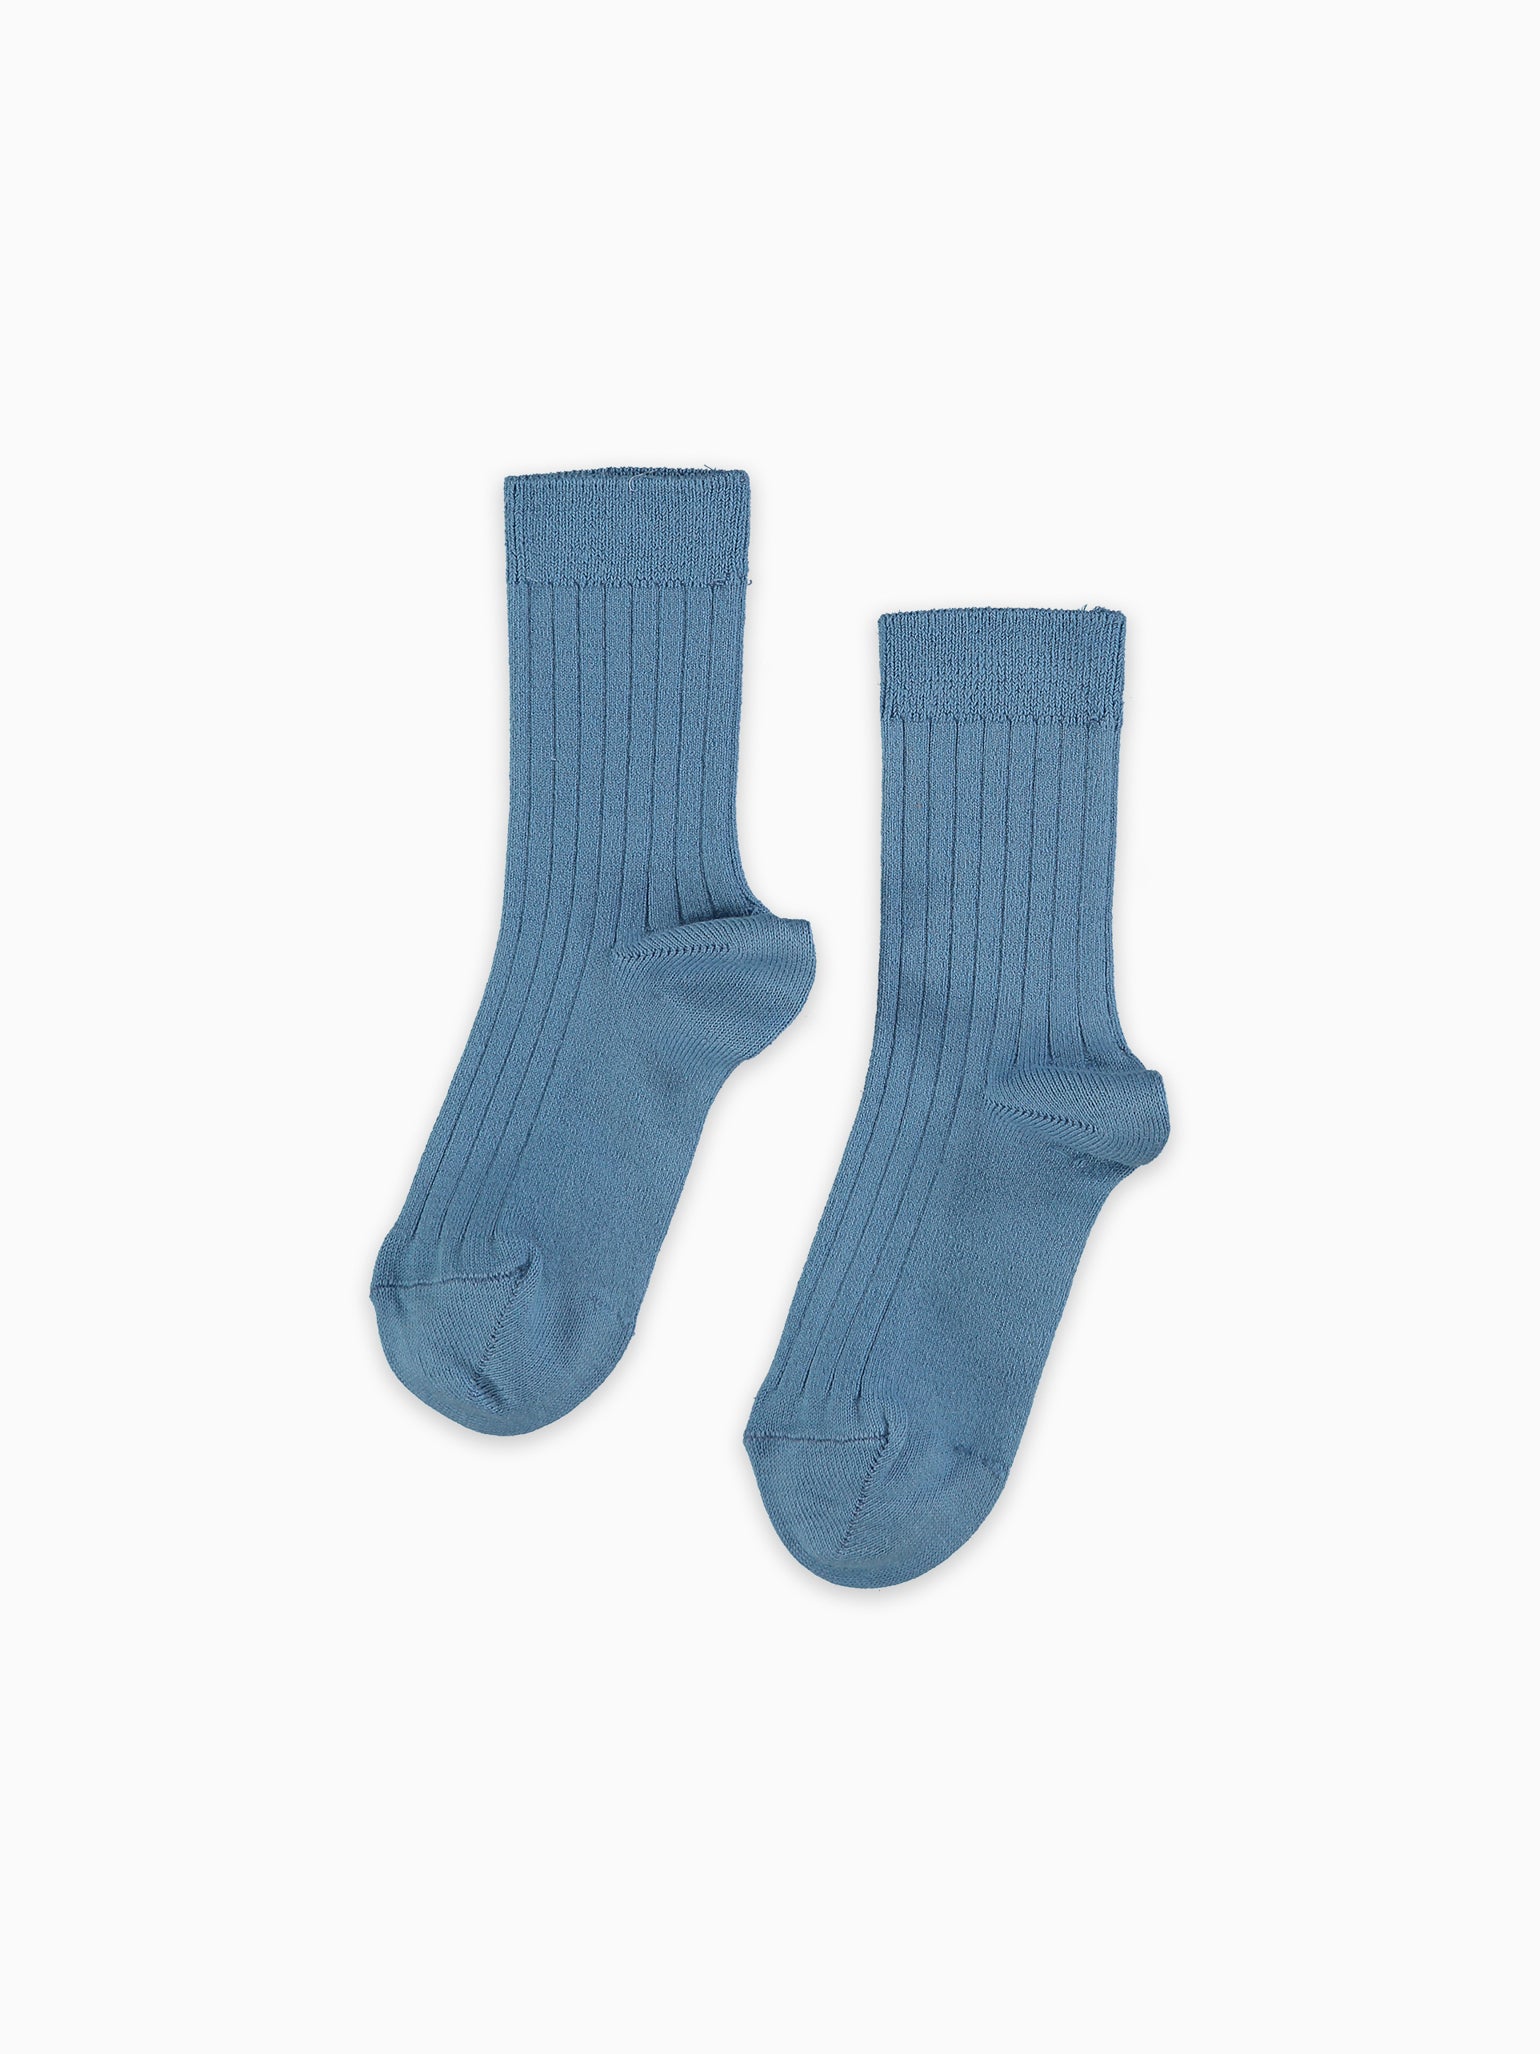 Dusty Blue Ribbed Short Kids Socks